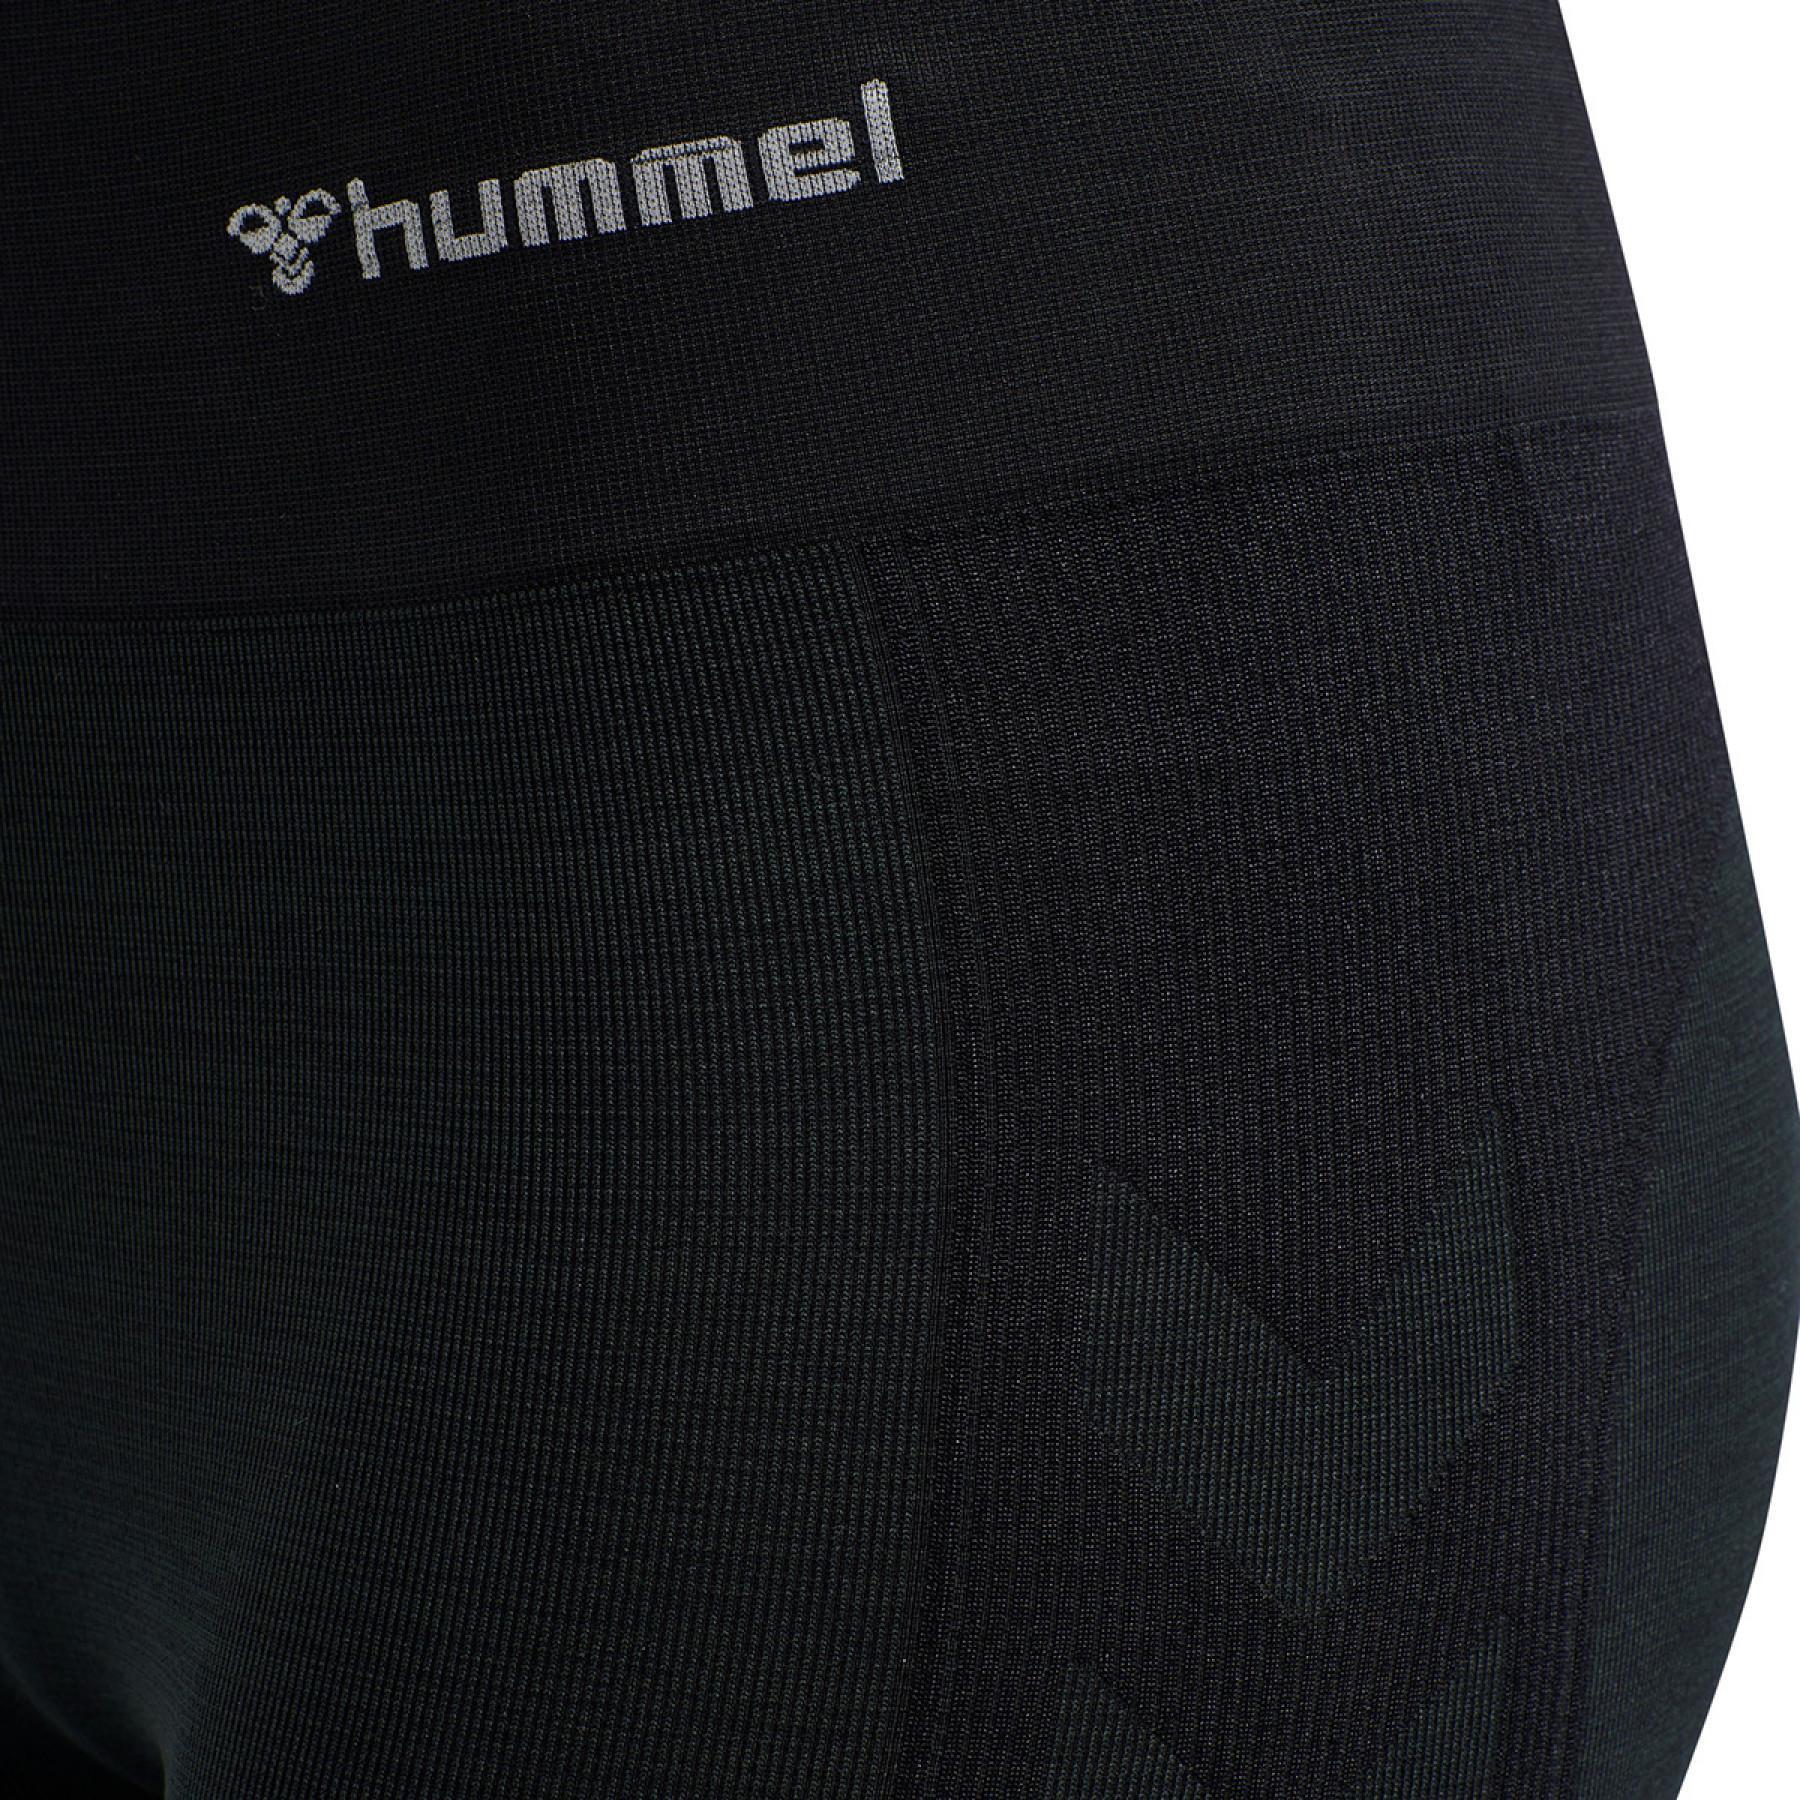 Pantalón corto mujer Hummel hmlclea cycling